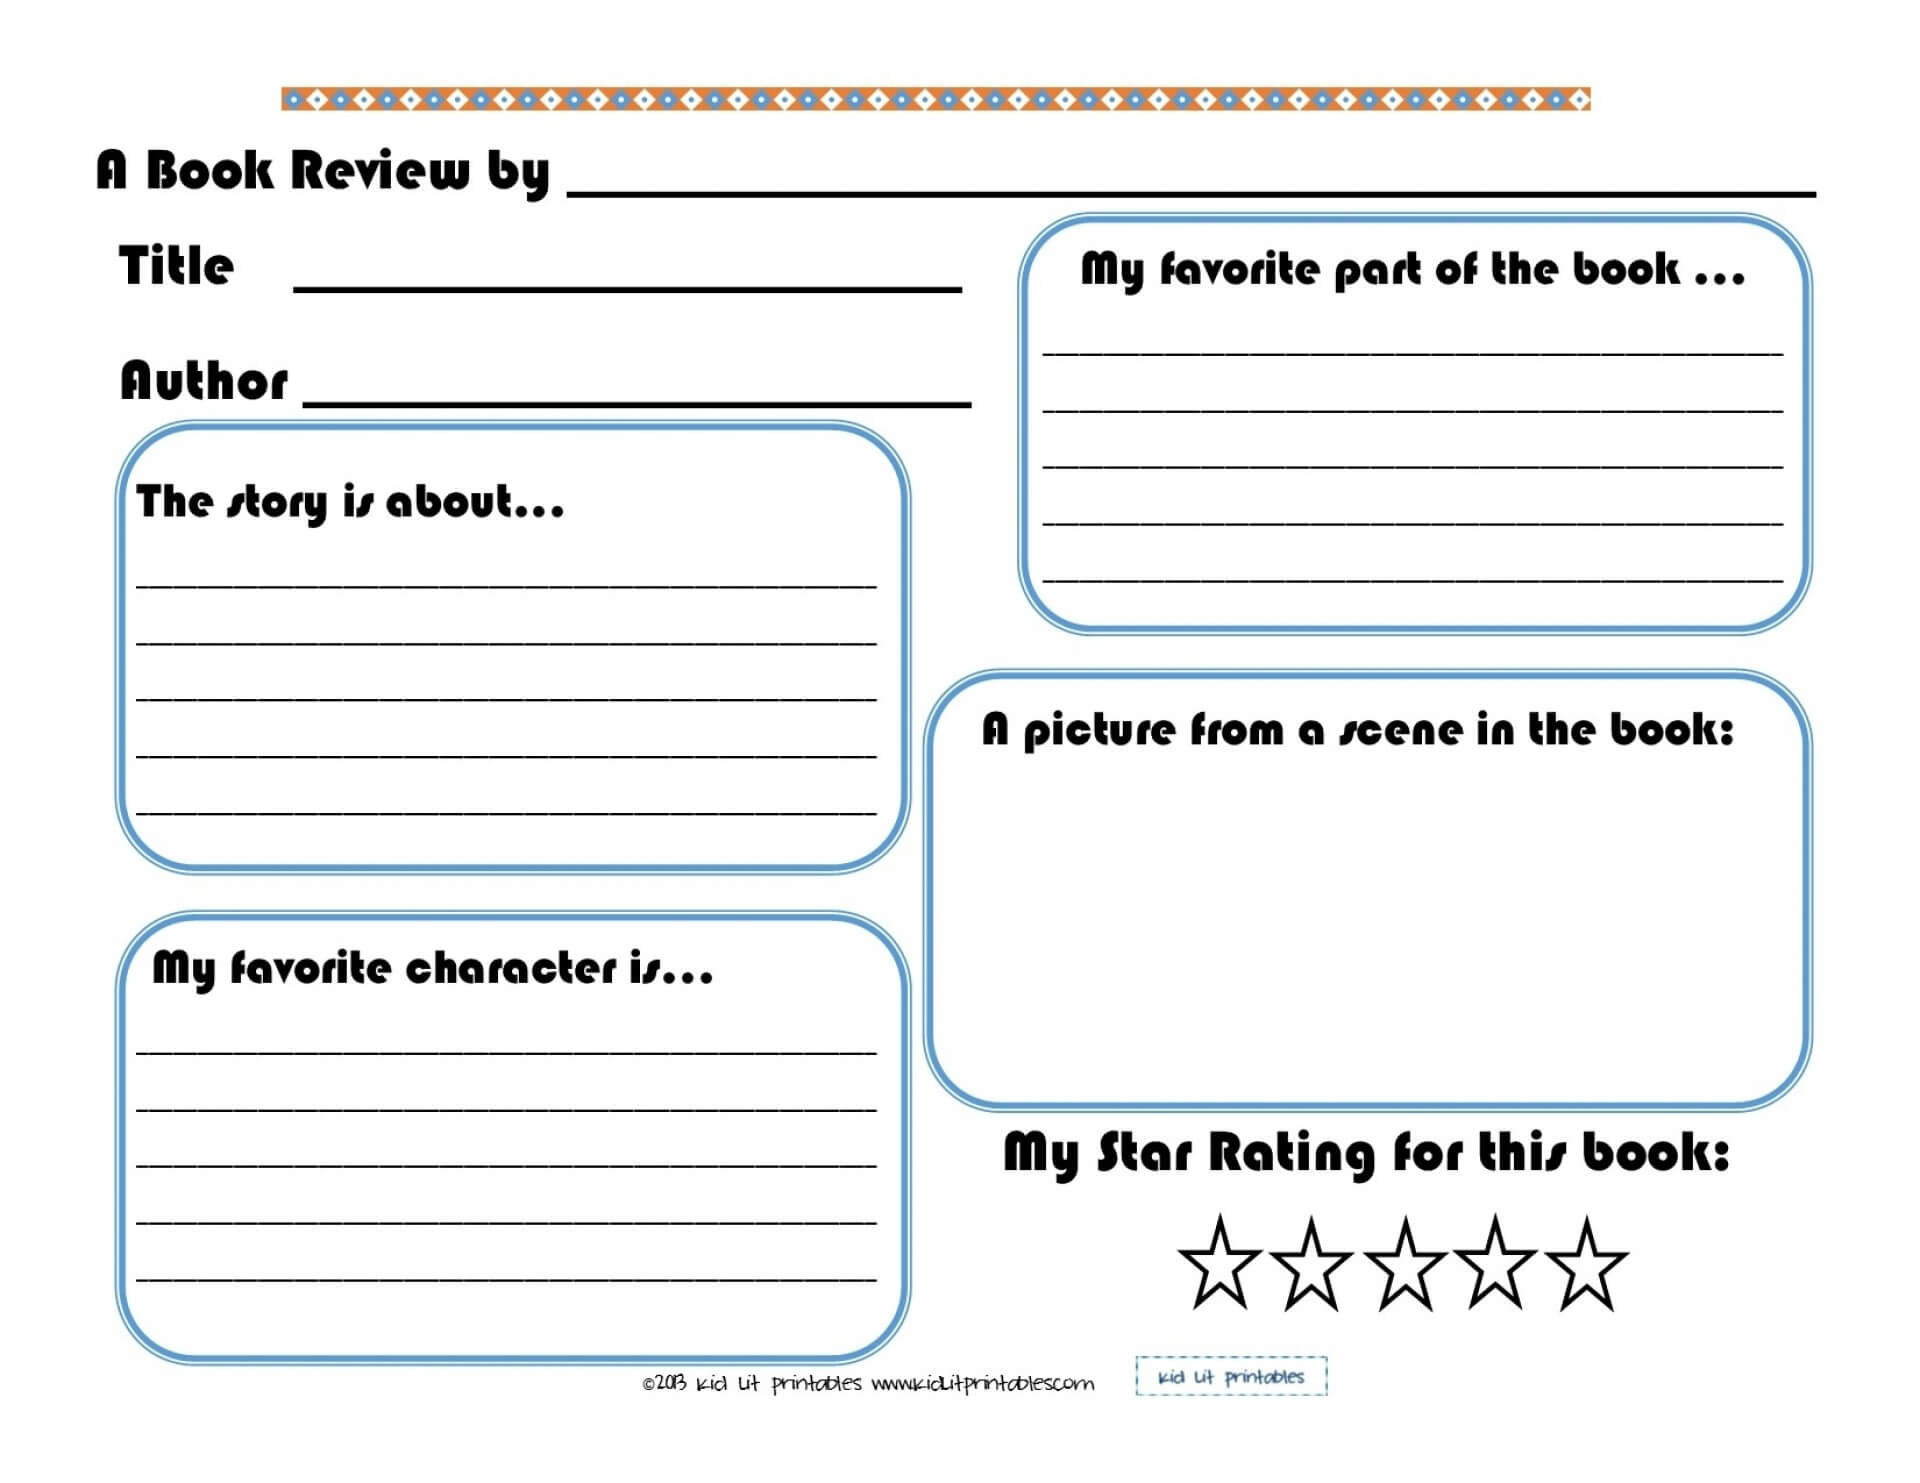 Adventure tasks. Book Review шаблон. Review шаблон. Write a Review шаблон. Book Review план.